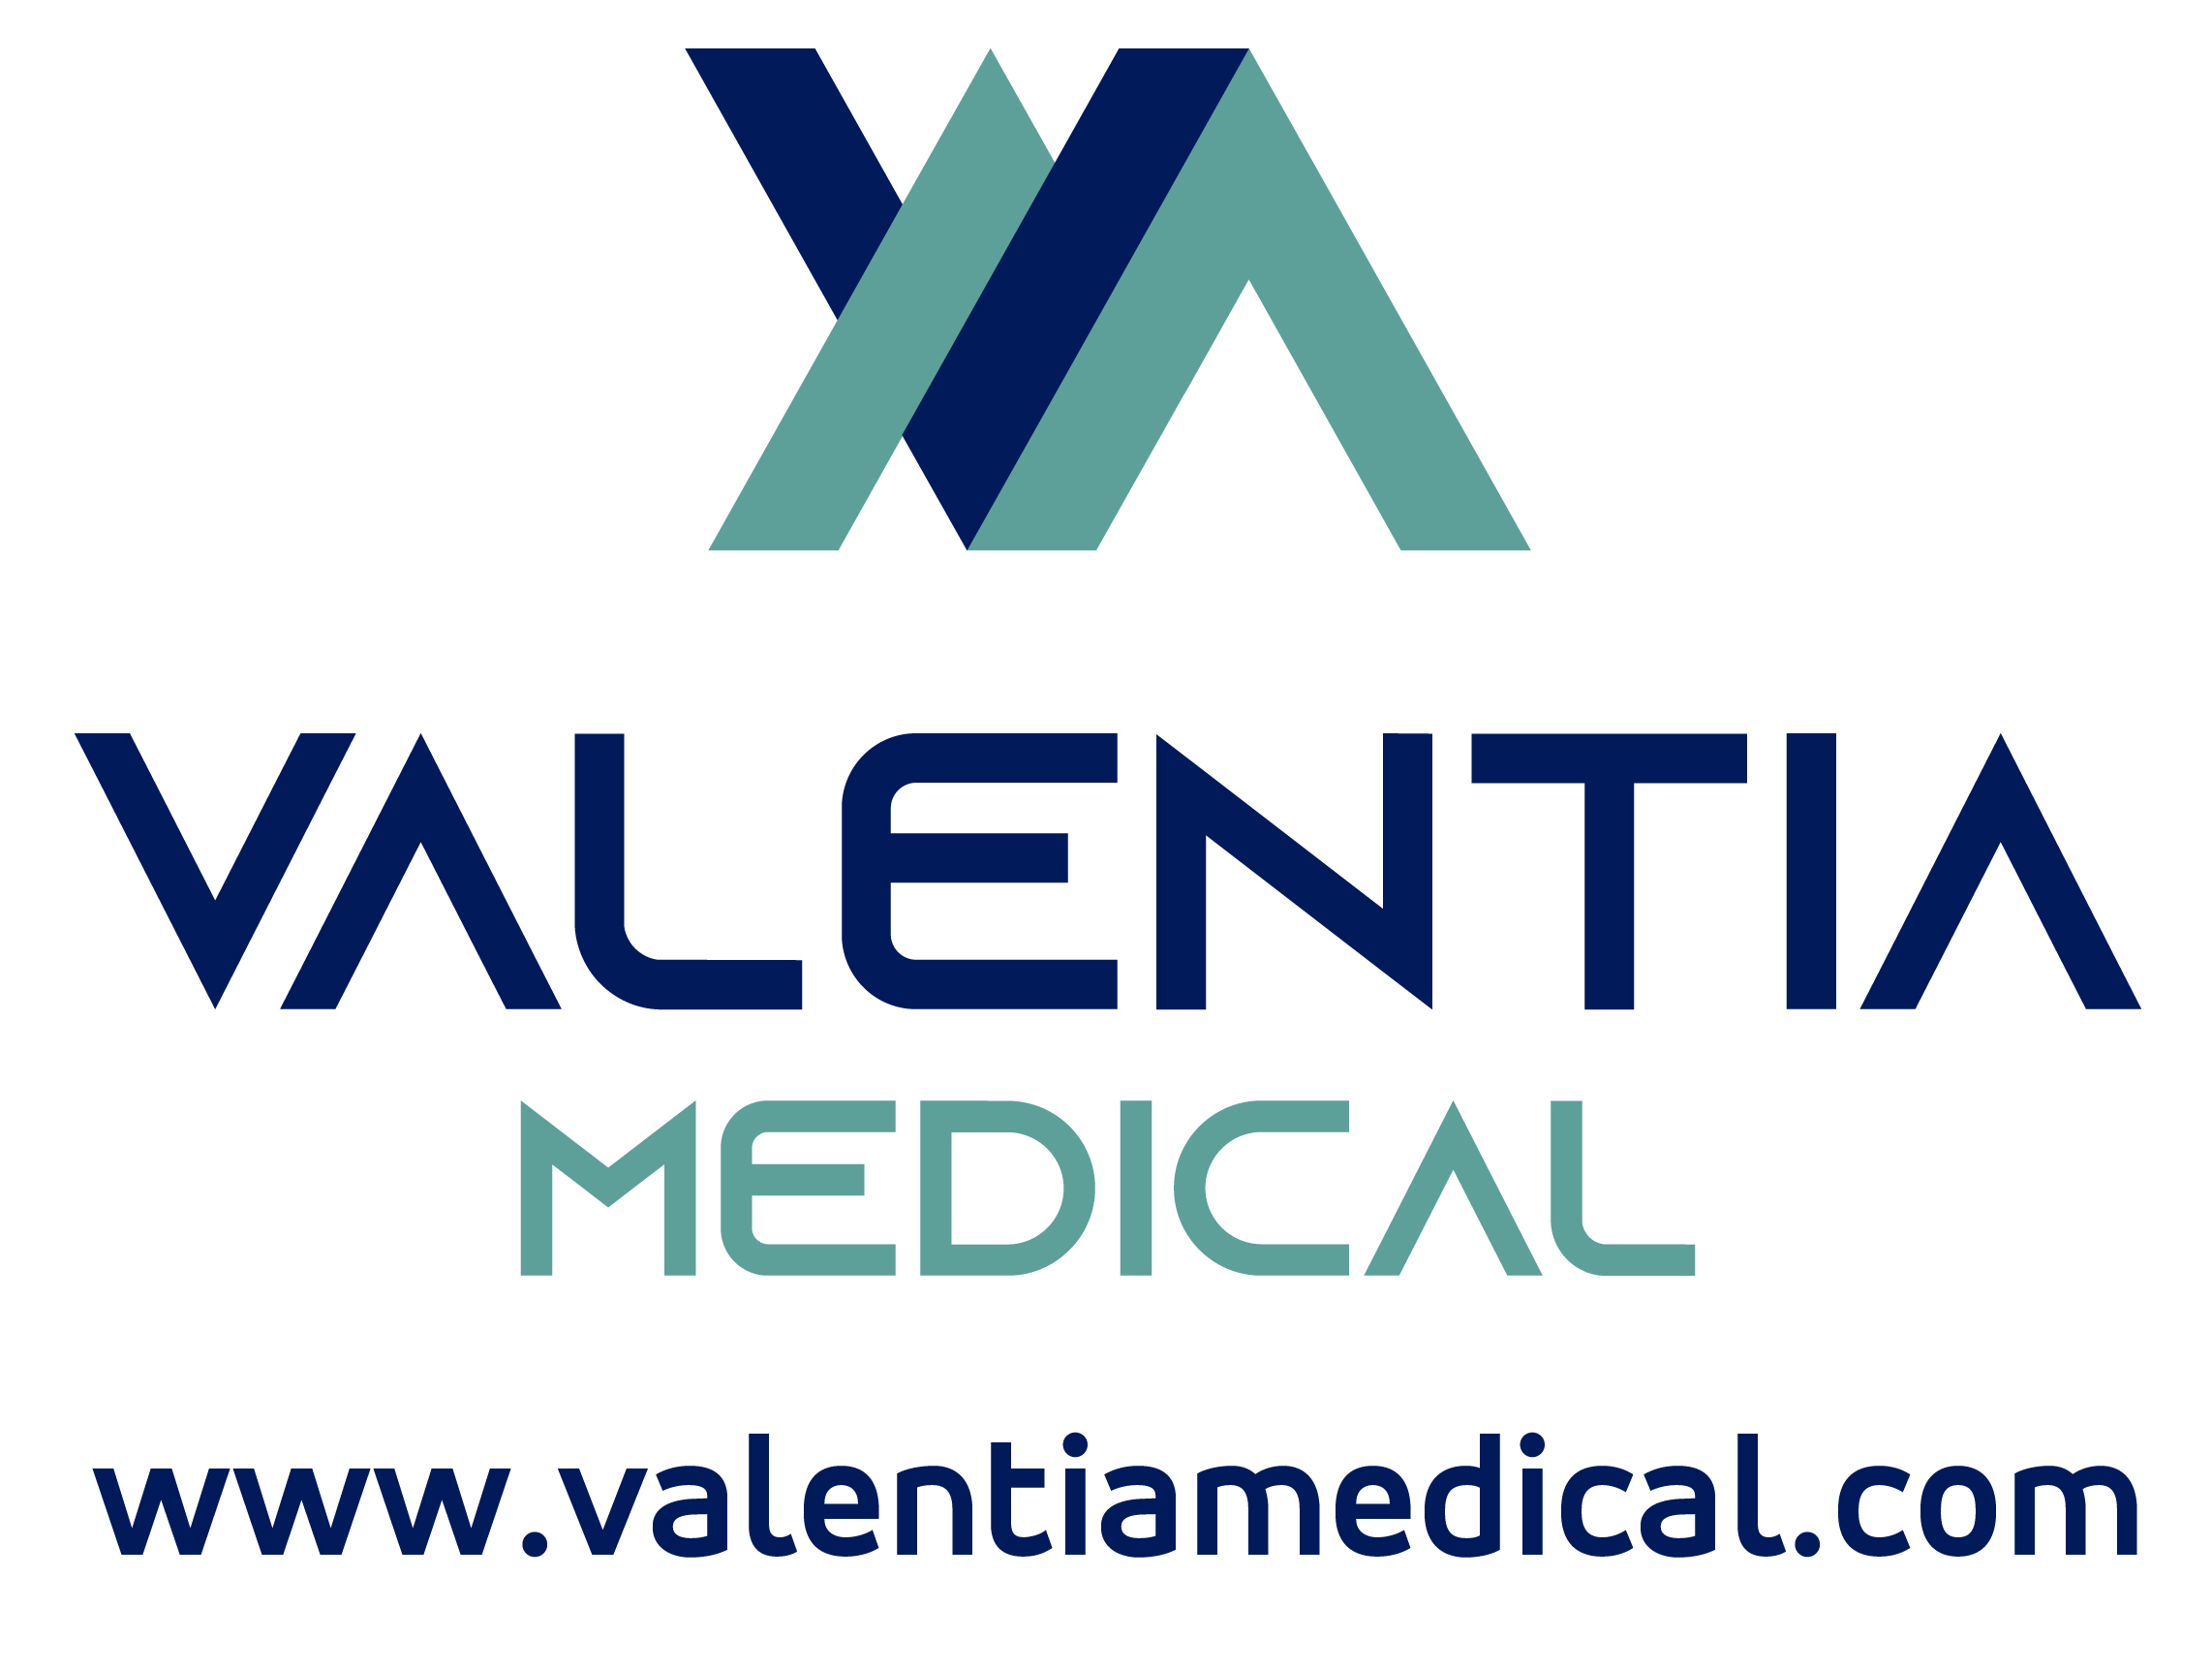 LOGO VALENTIA MEDICAL - Valentia Medical